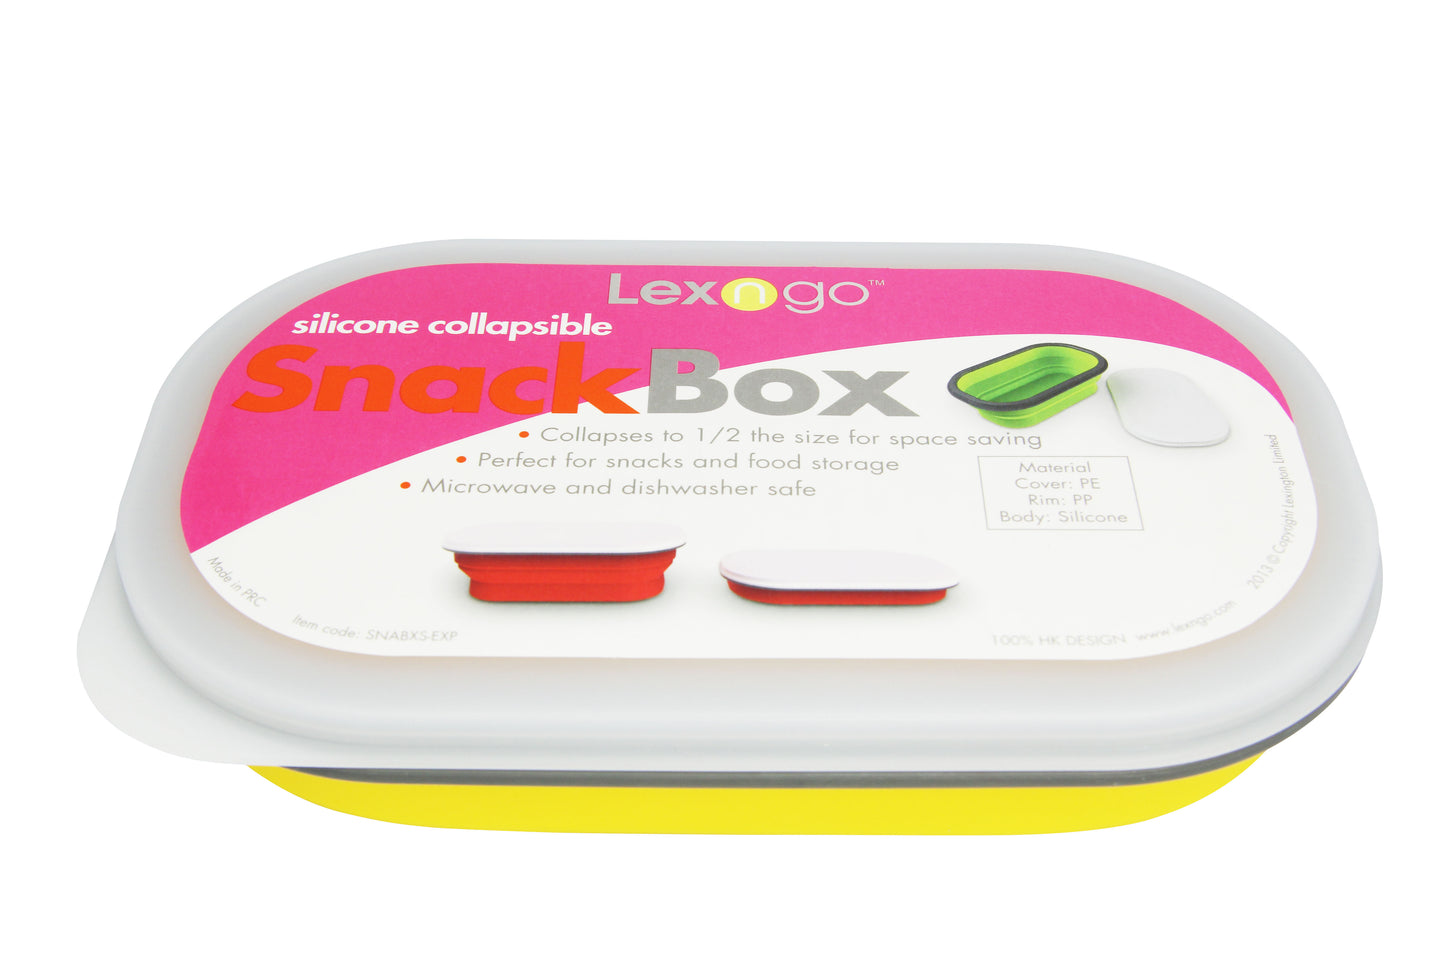 Lexngo Silicone Collapsible Snack Box (S) 矽膠蓋可摺疊食物盒 (細)